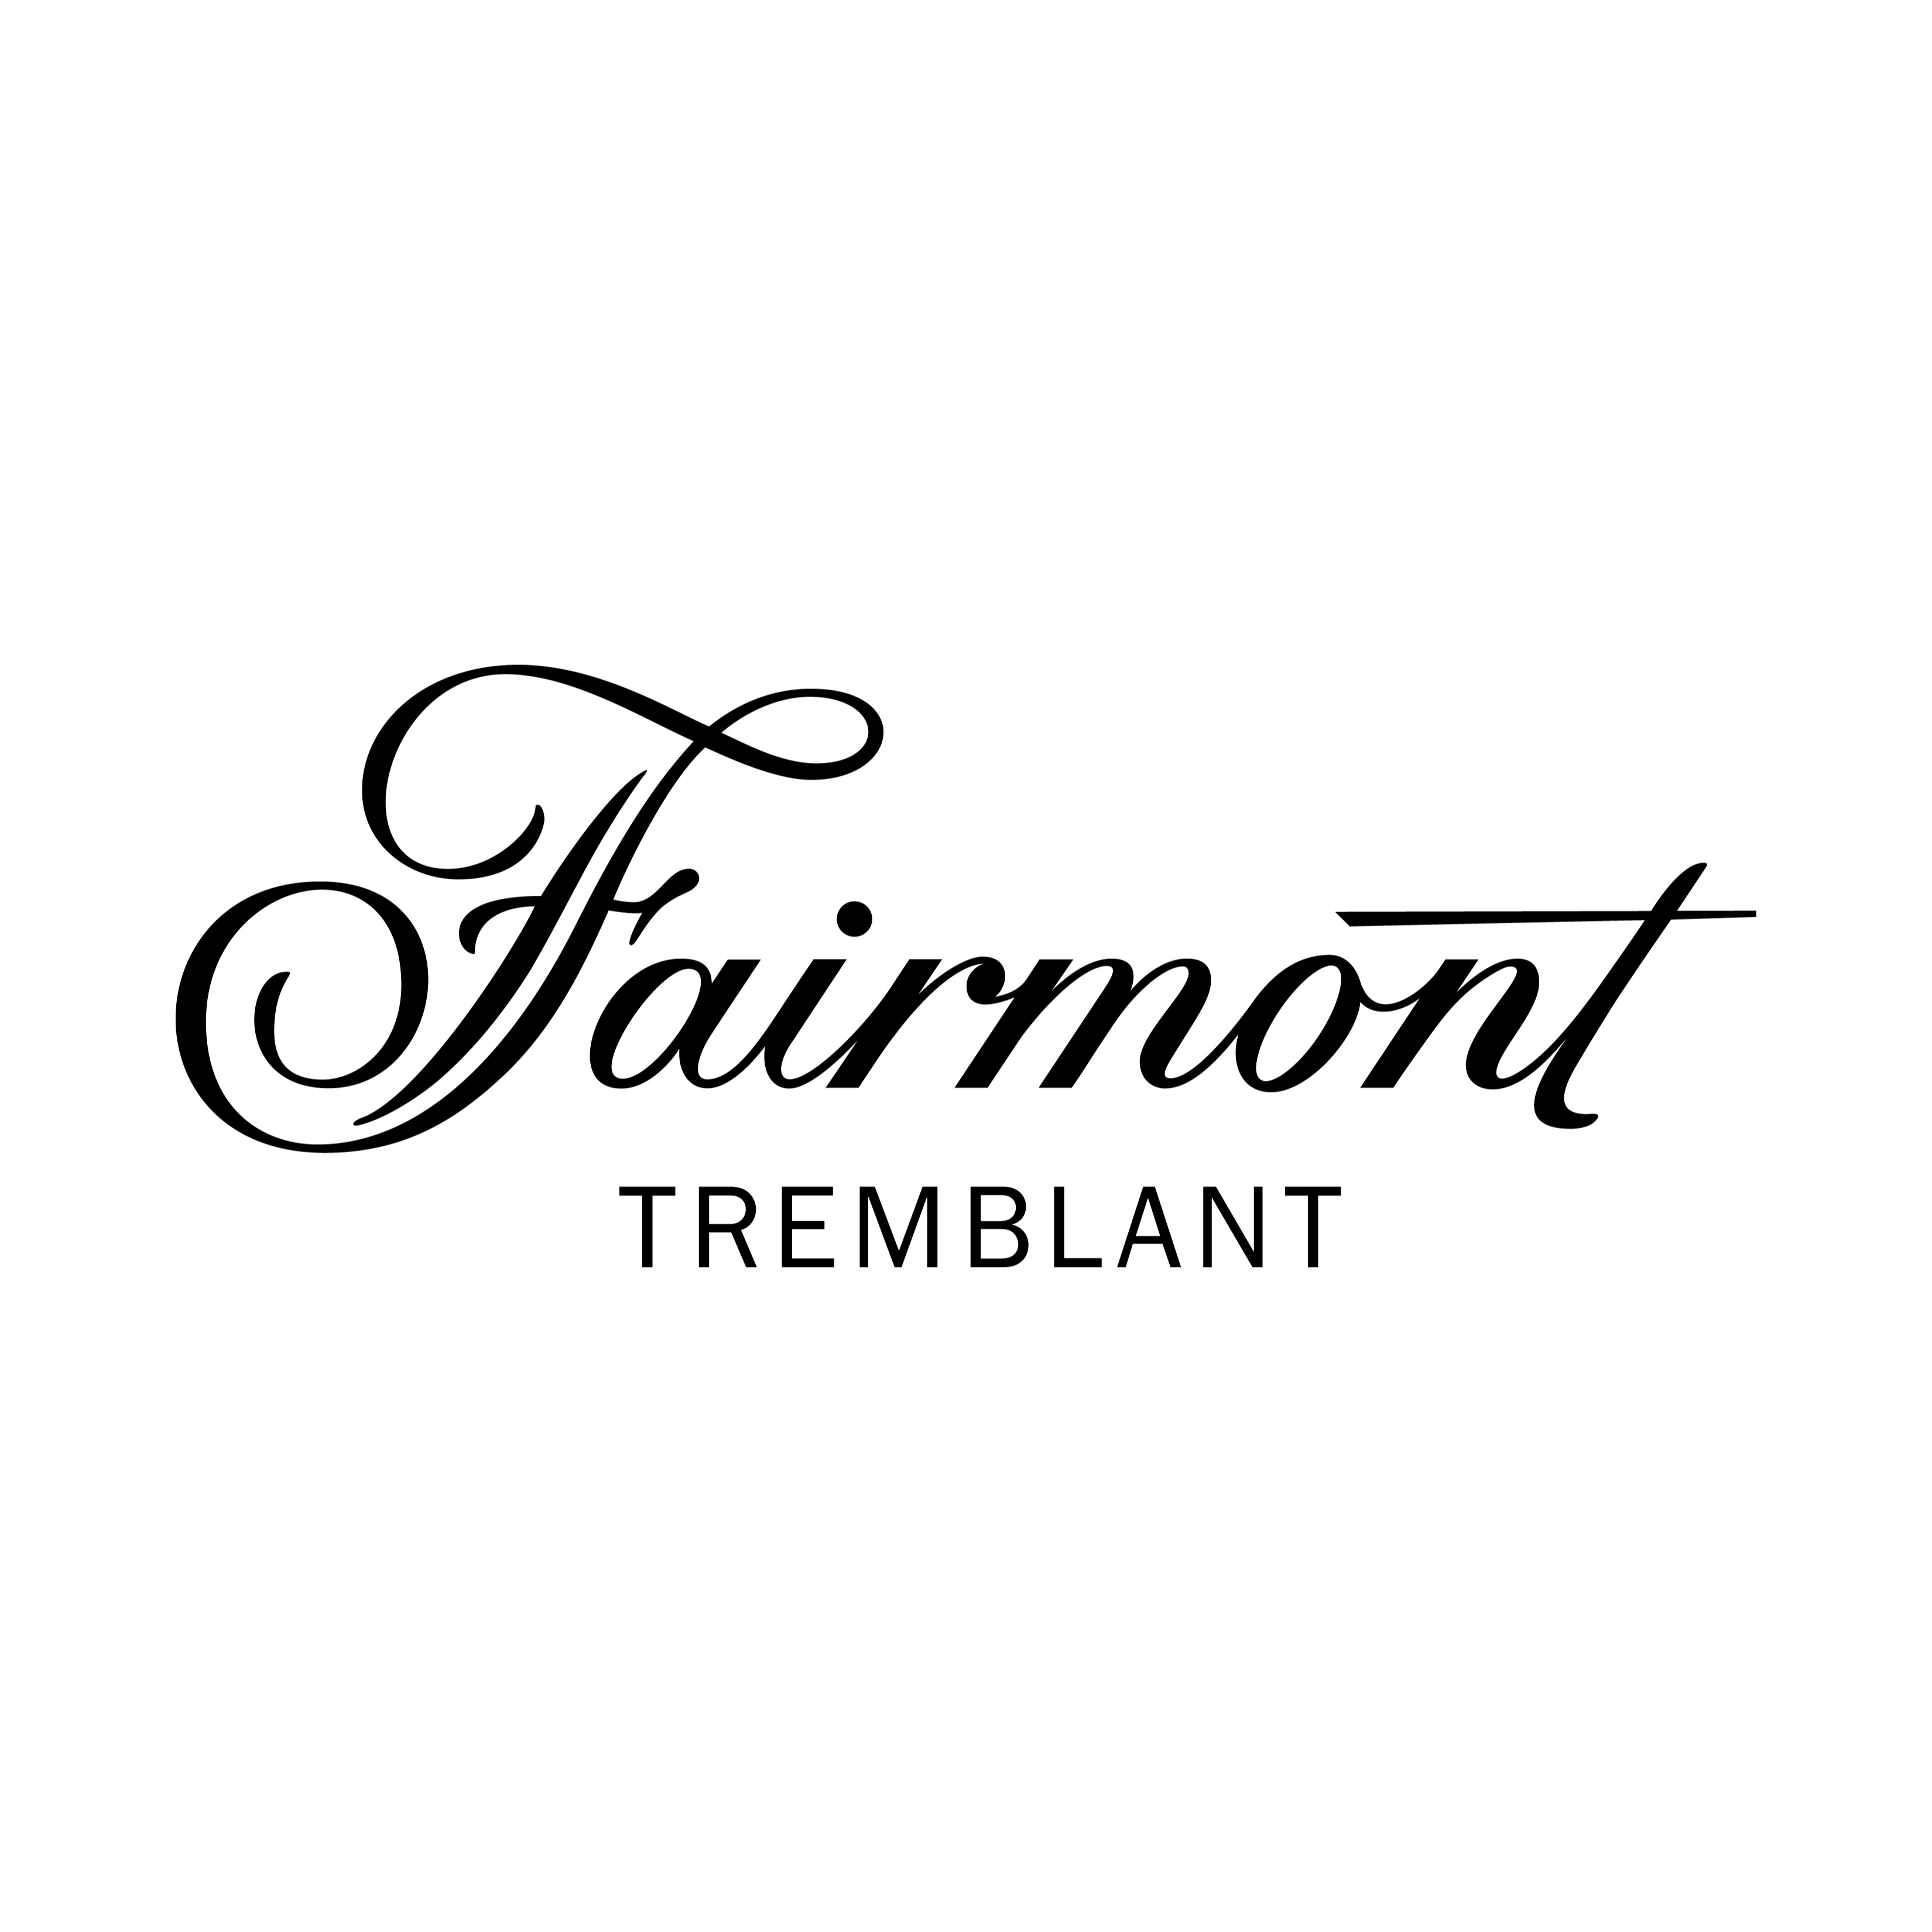 Fairmont Tremblant Logo